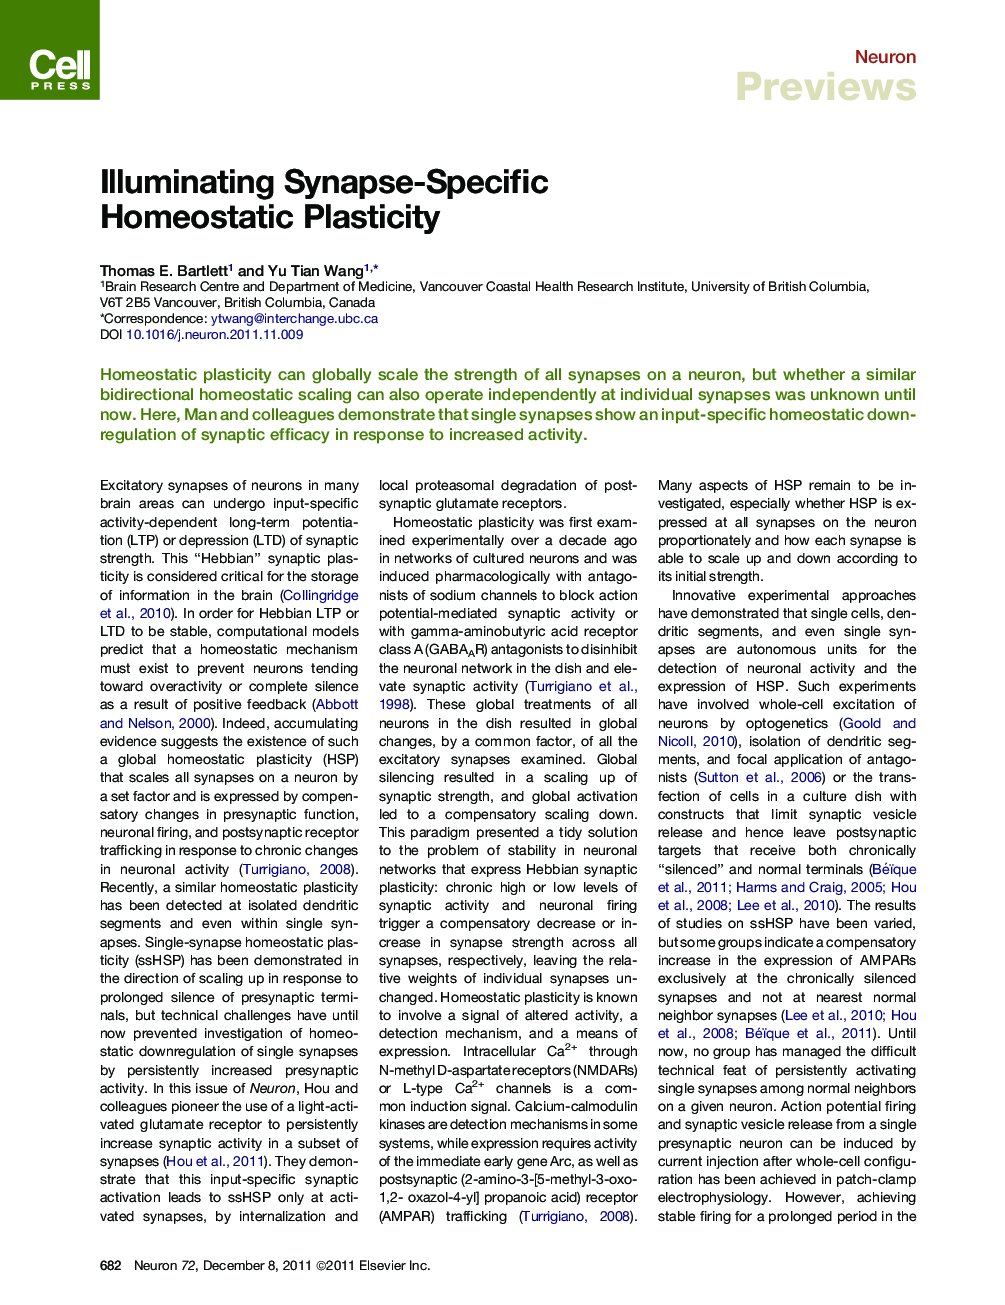 Illuminating Synapse-Specific Homeostatic Plasticity